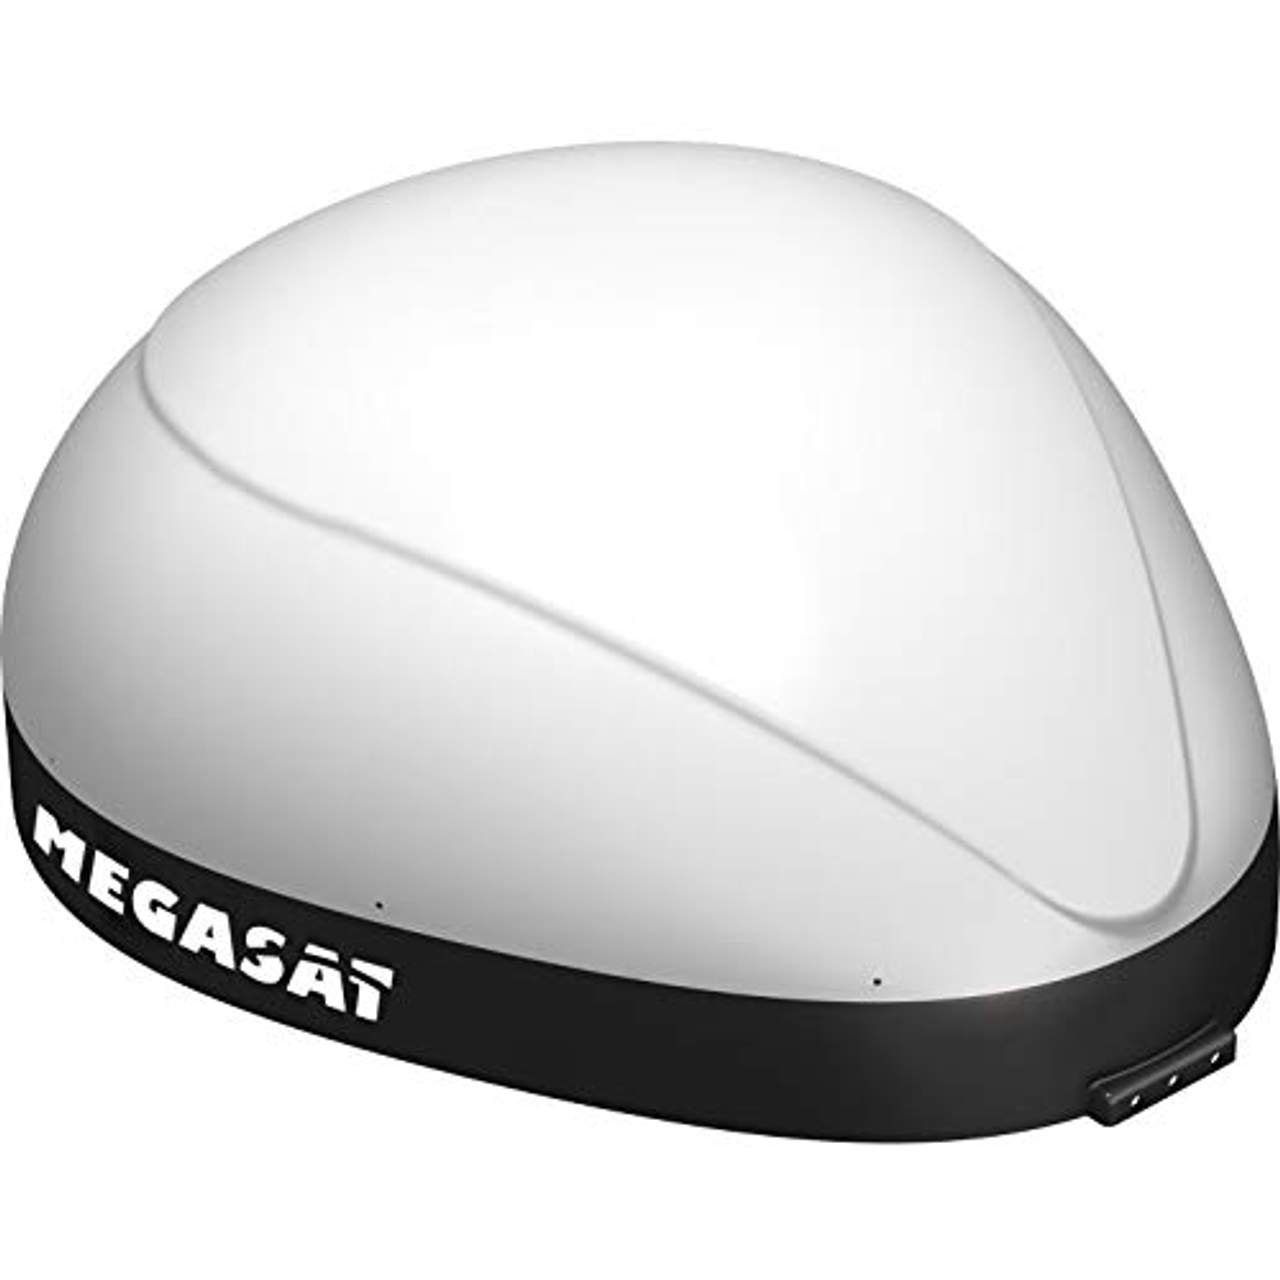 Megasat Maxview 1500150 Campingman